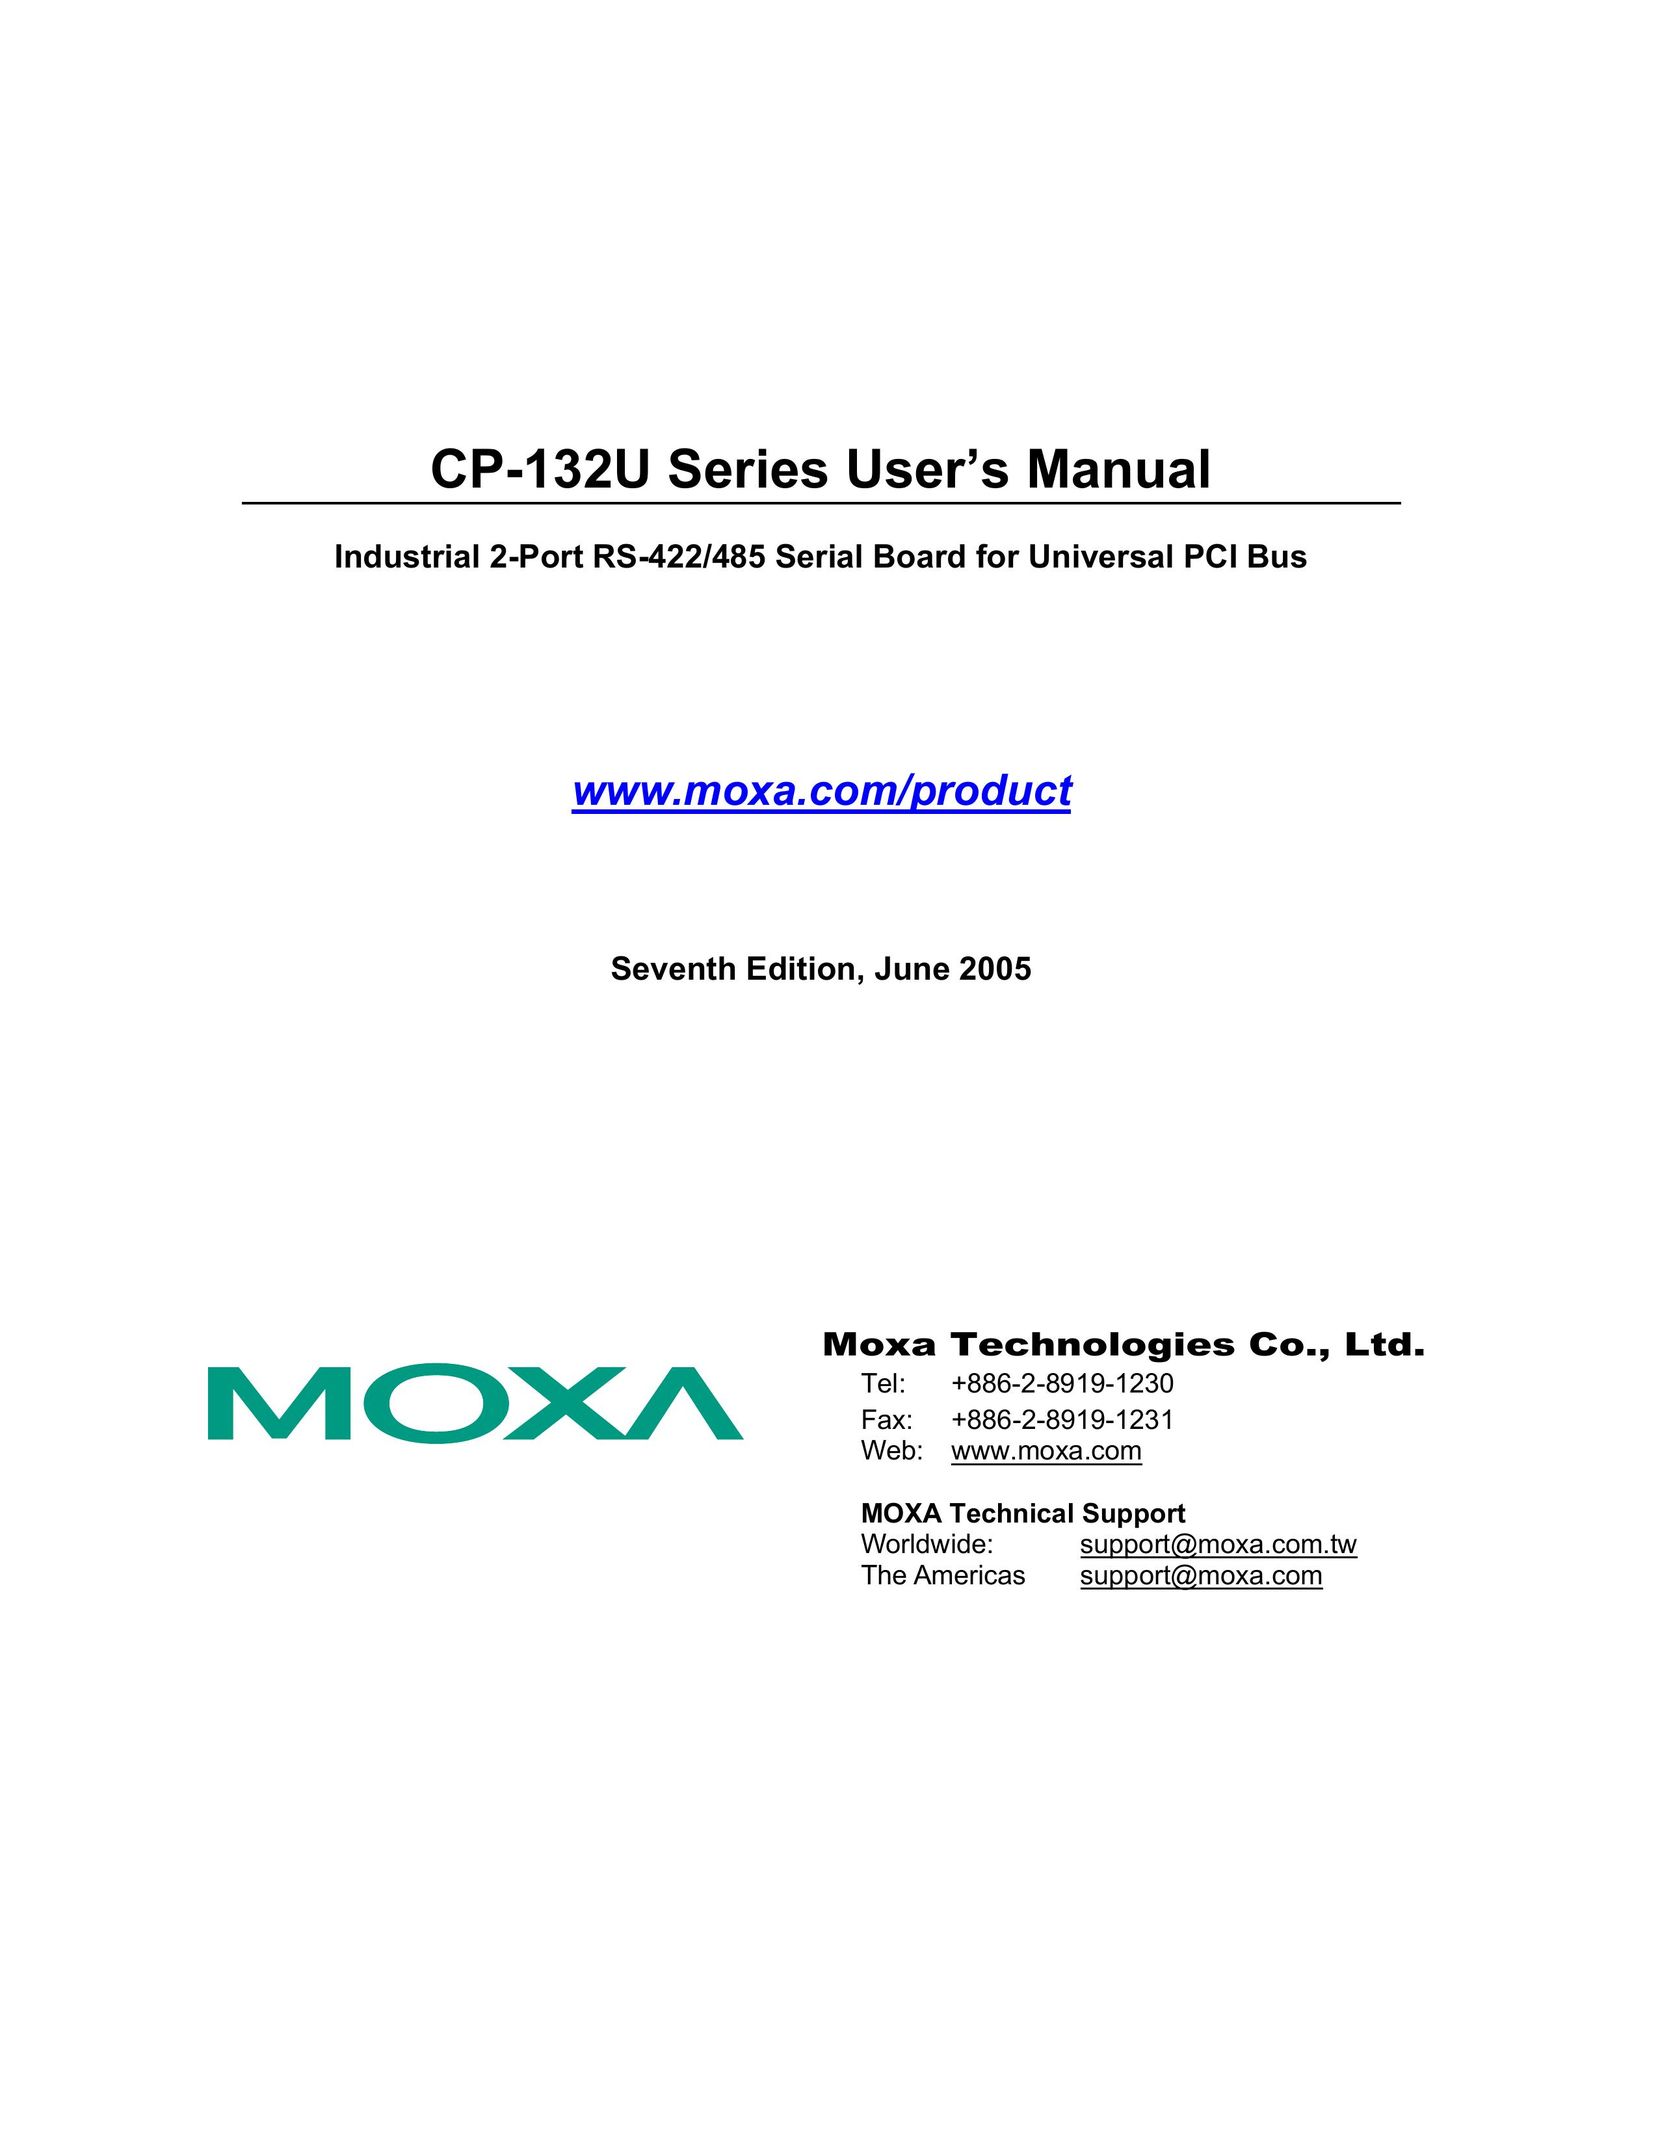 Moxa Technologies CP-132U Computer Hardware User Manual